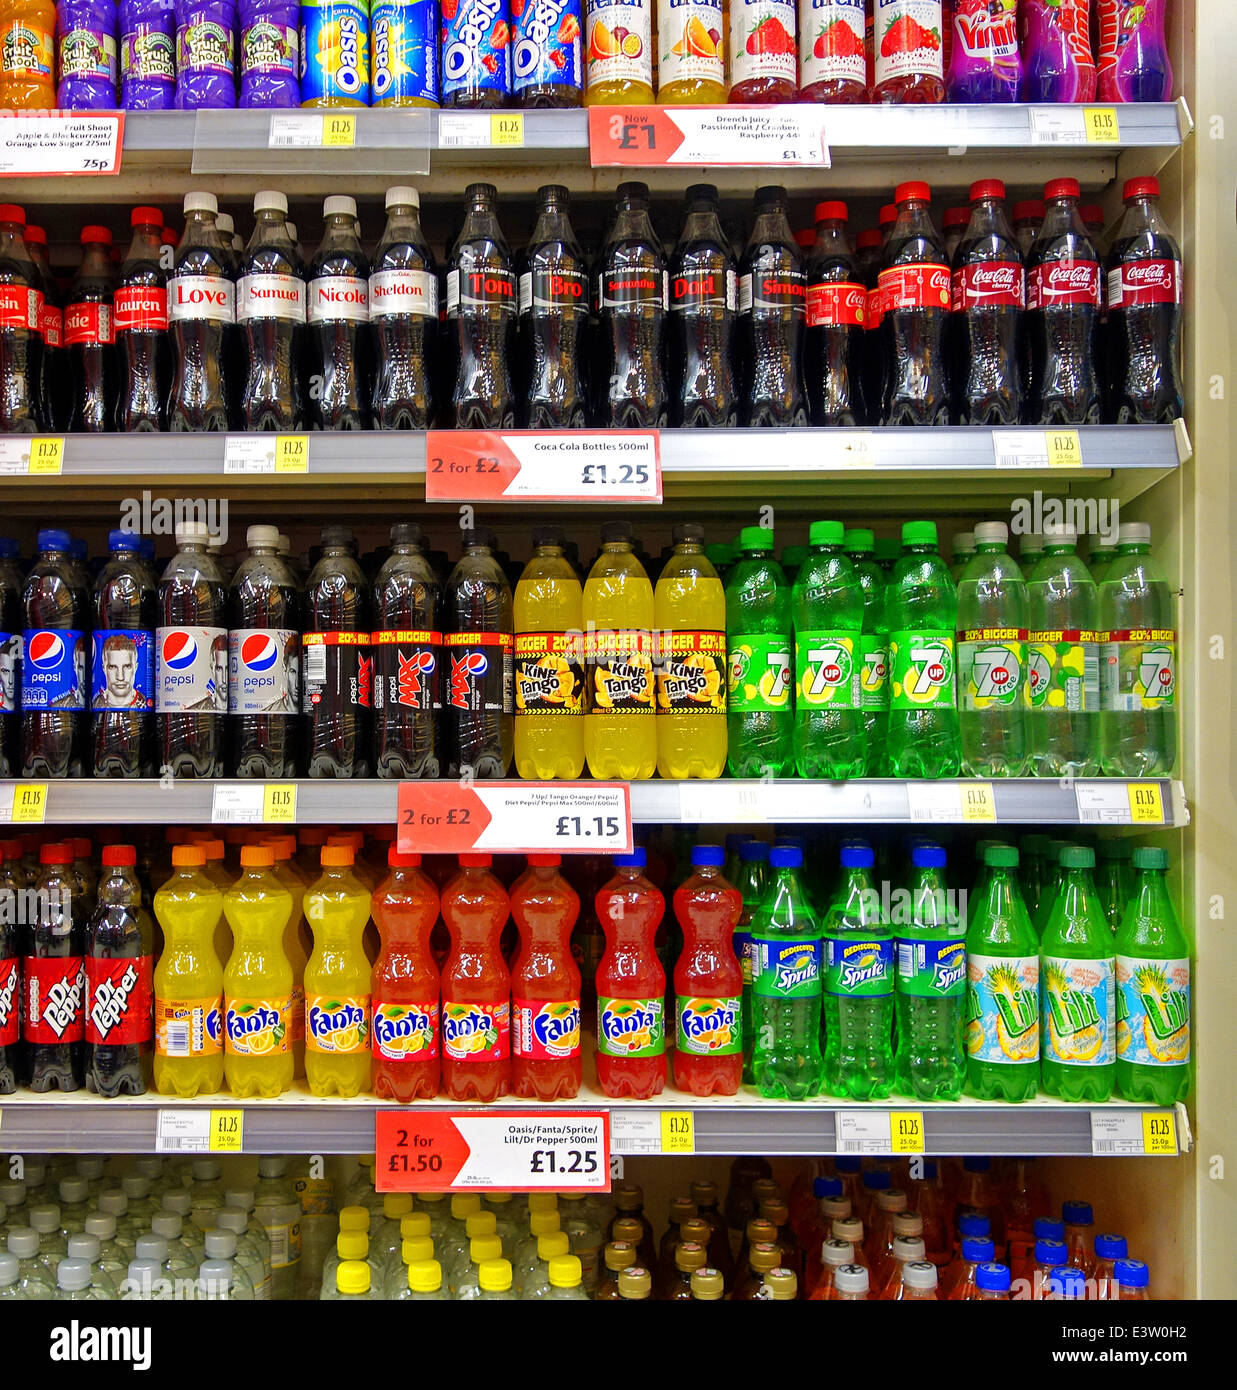 https://c8.alamy.com/comp/E3W0H2/bottles-of-soft-drinks-in-a-uk-supermarket-E3W0H2.jpg